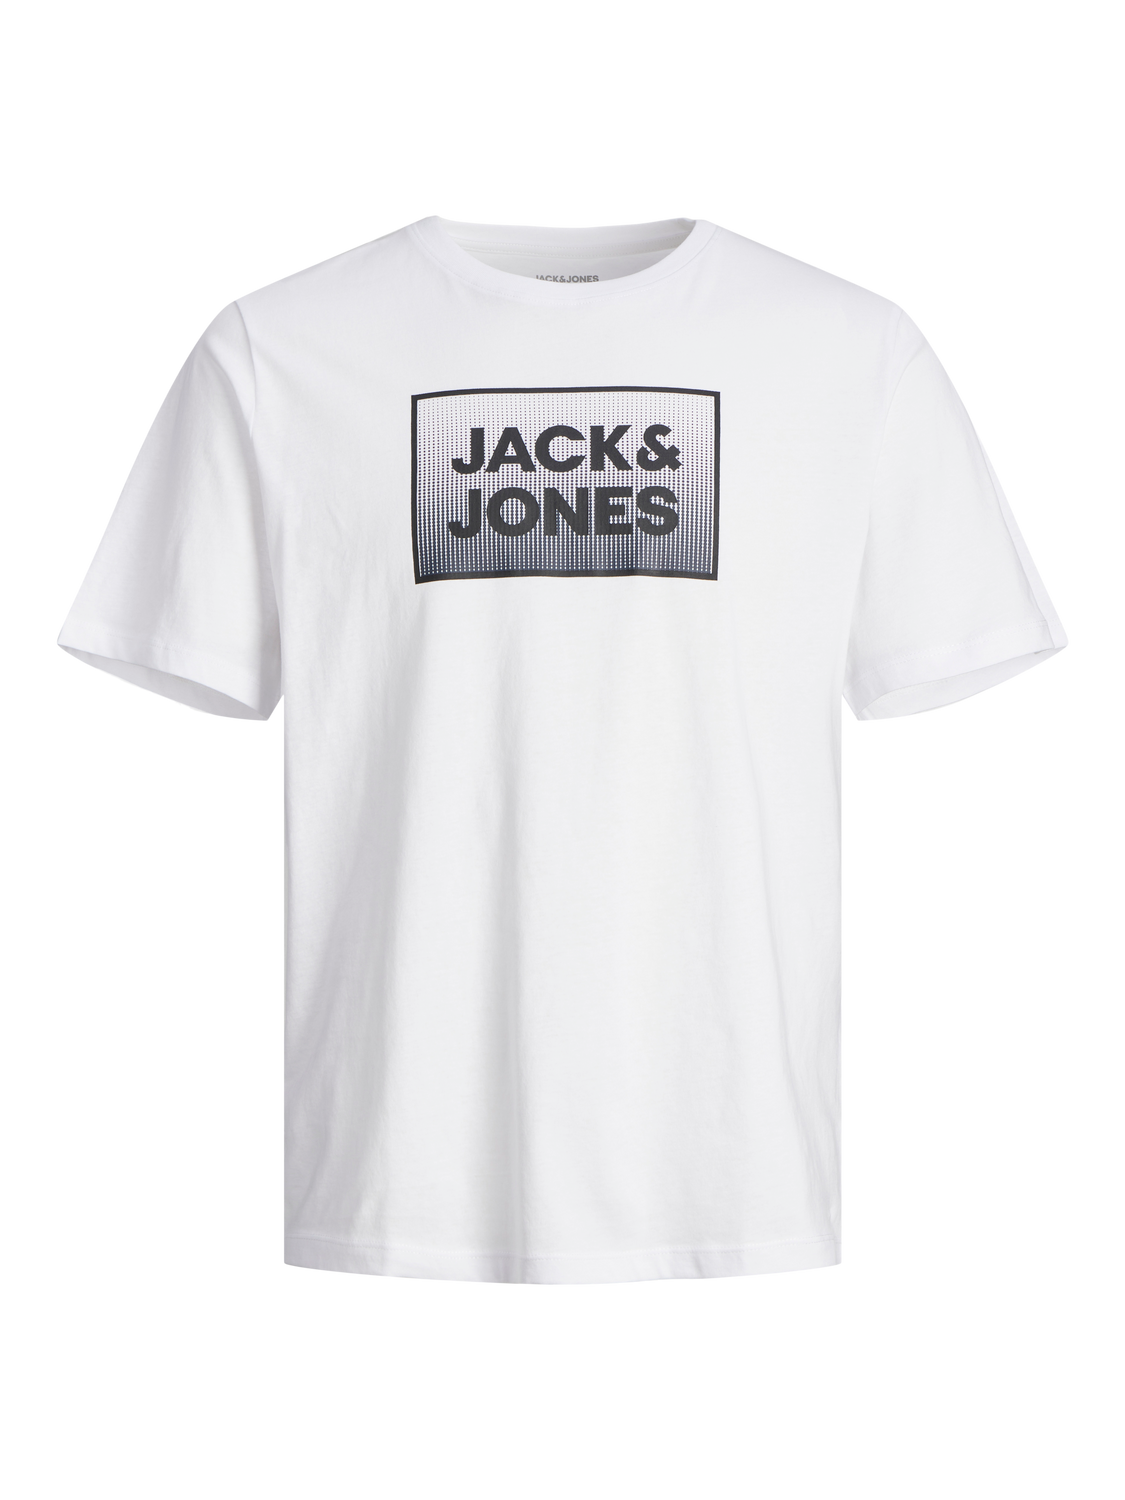 Camiseta manga corta blanca con logo - JJSTEEL